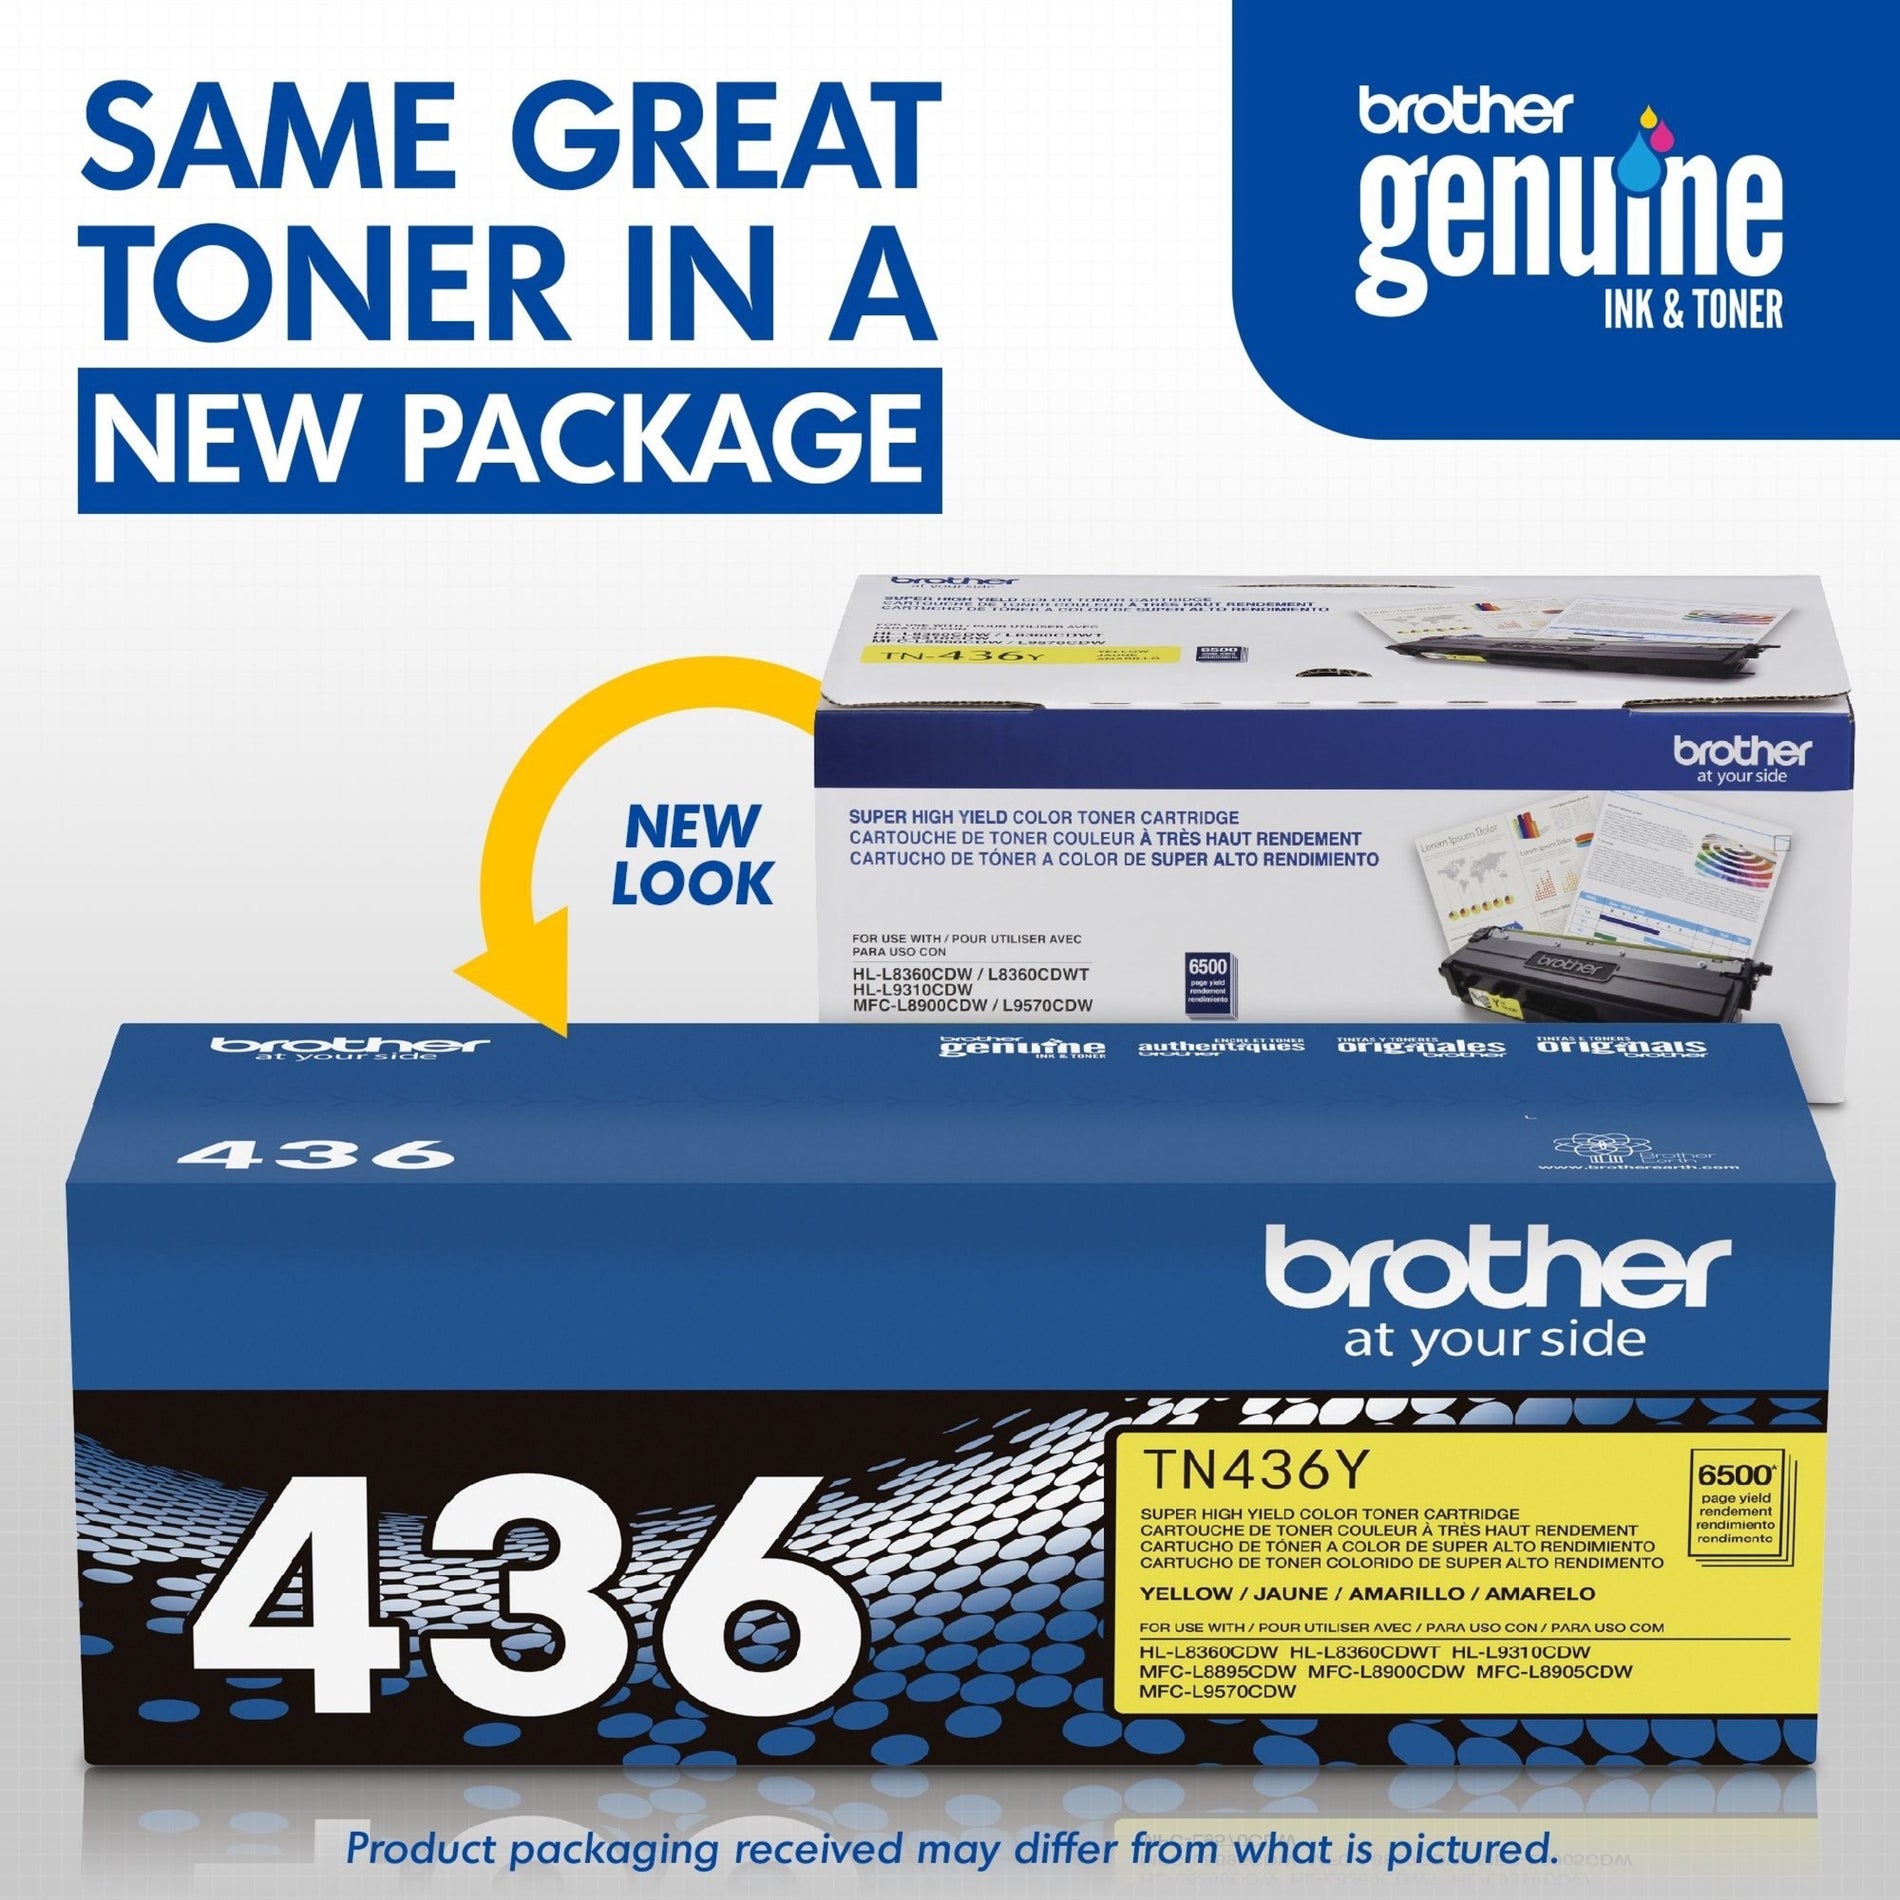 Brother TN436Y Toner Cartridge - Yellow, Original Laser Toner Cartridge - 6500 Pages